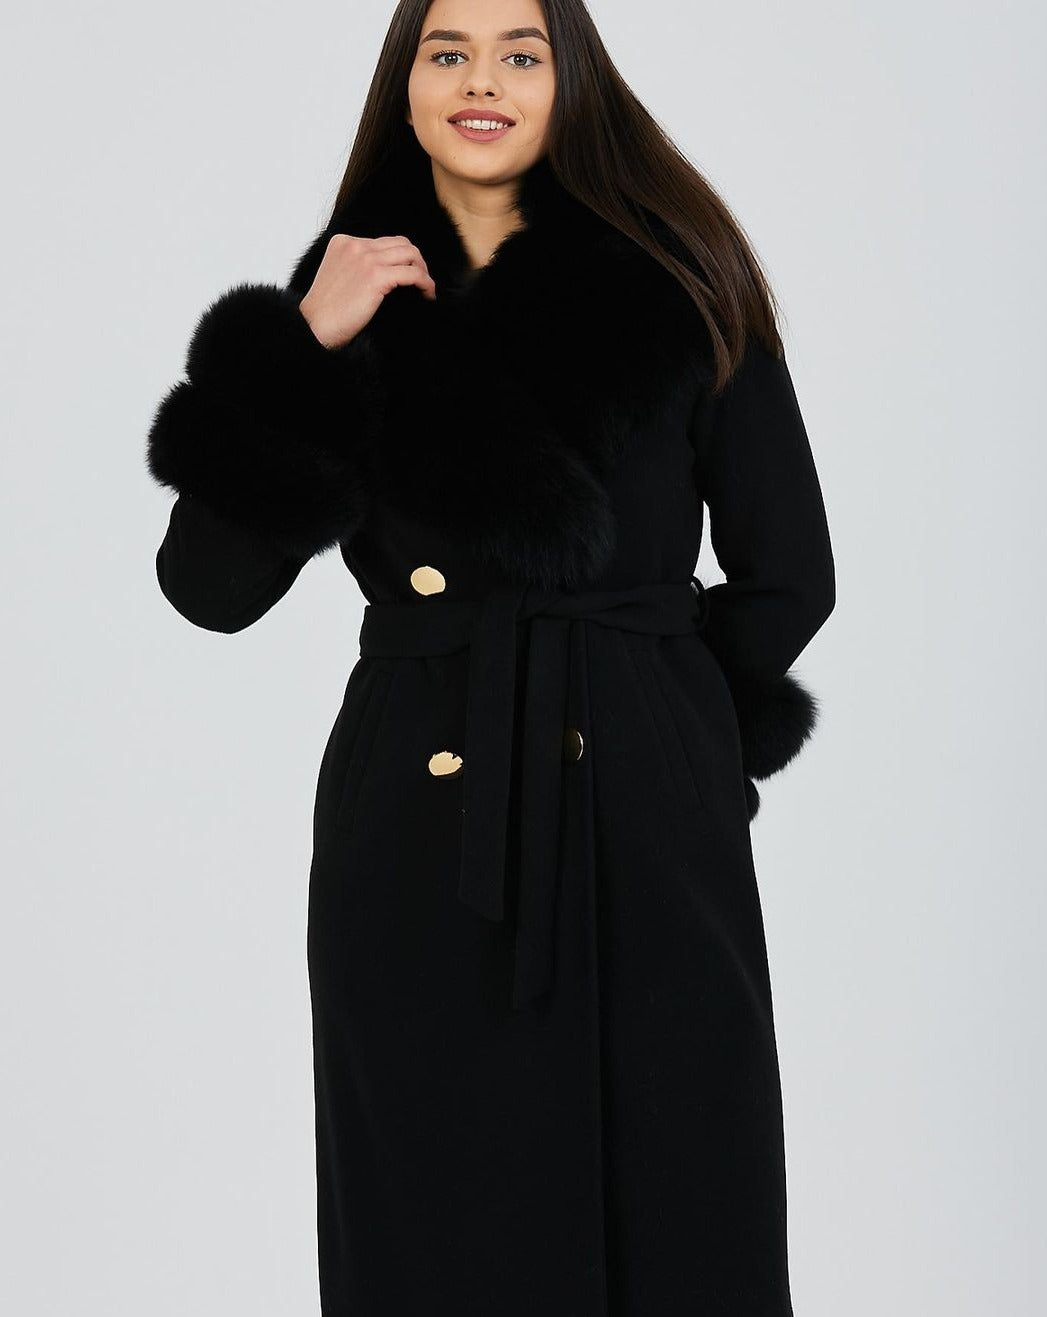 Sophisticated GLORIA BLACK Coat with Customizable Fox Fur Details